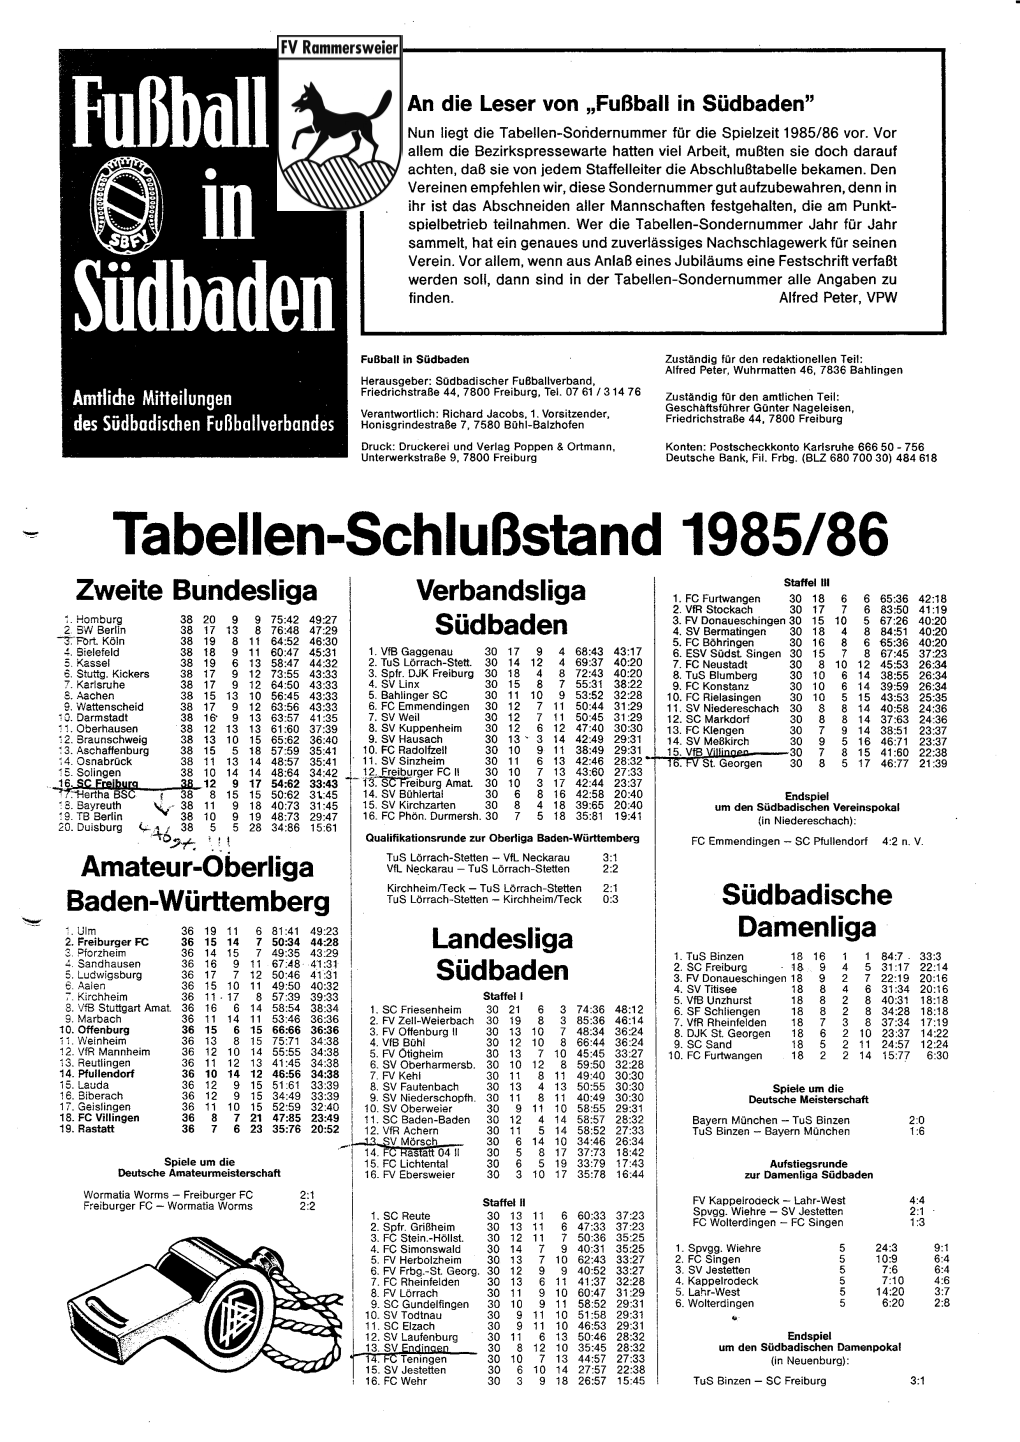 Abschlusstabellen SBFV 1985/86